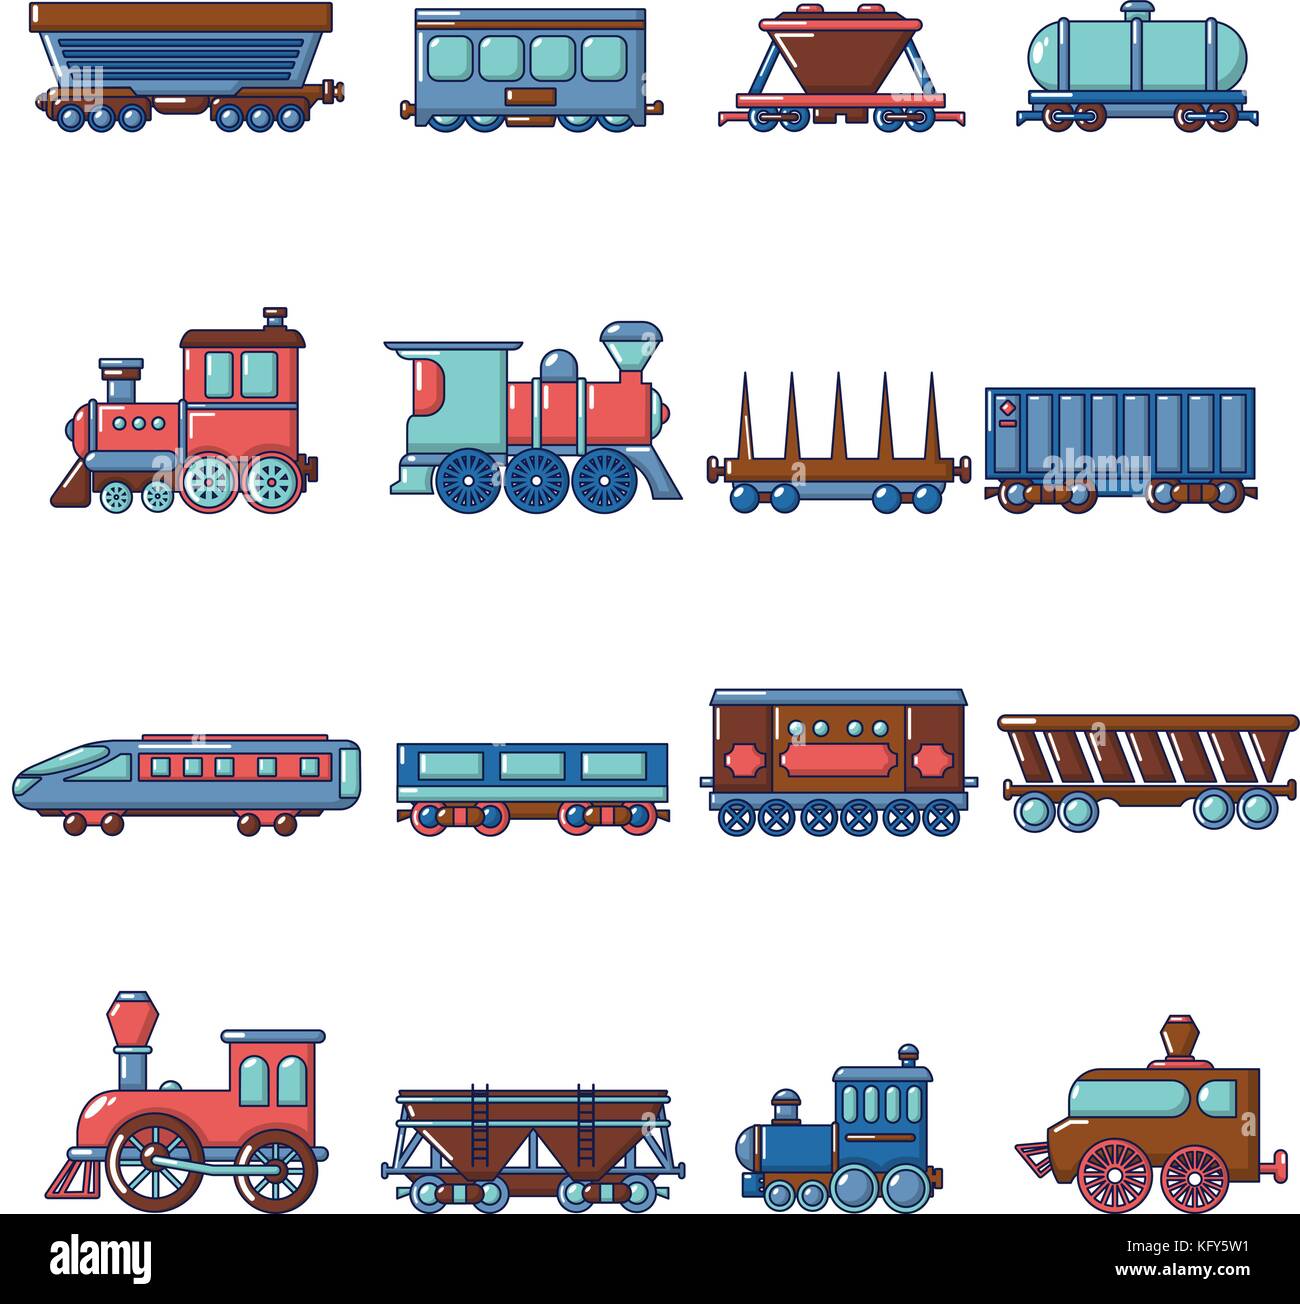 Railway carriage icons set, cartoon style Stock Vector